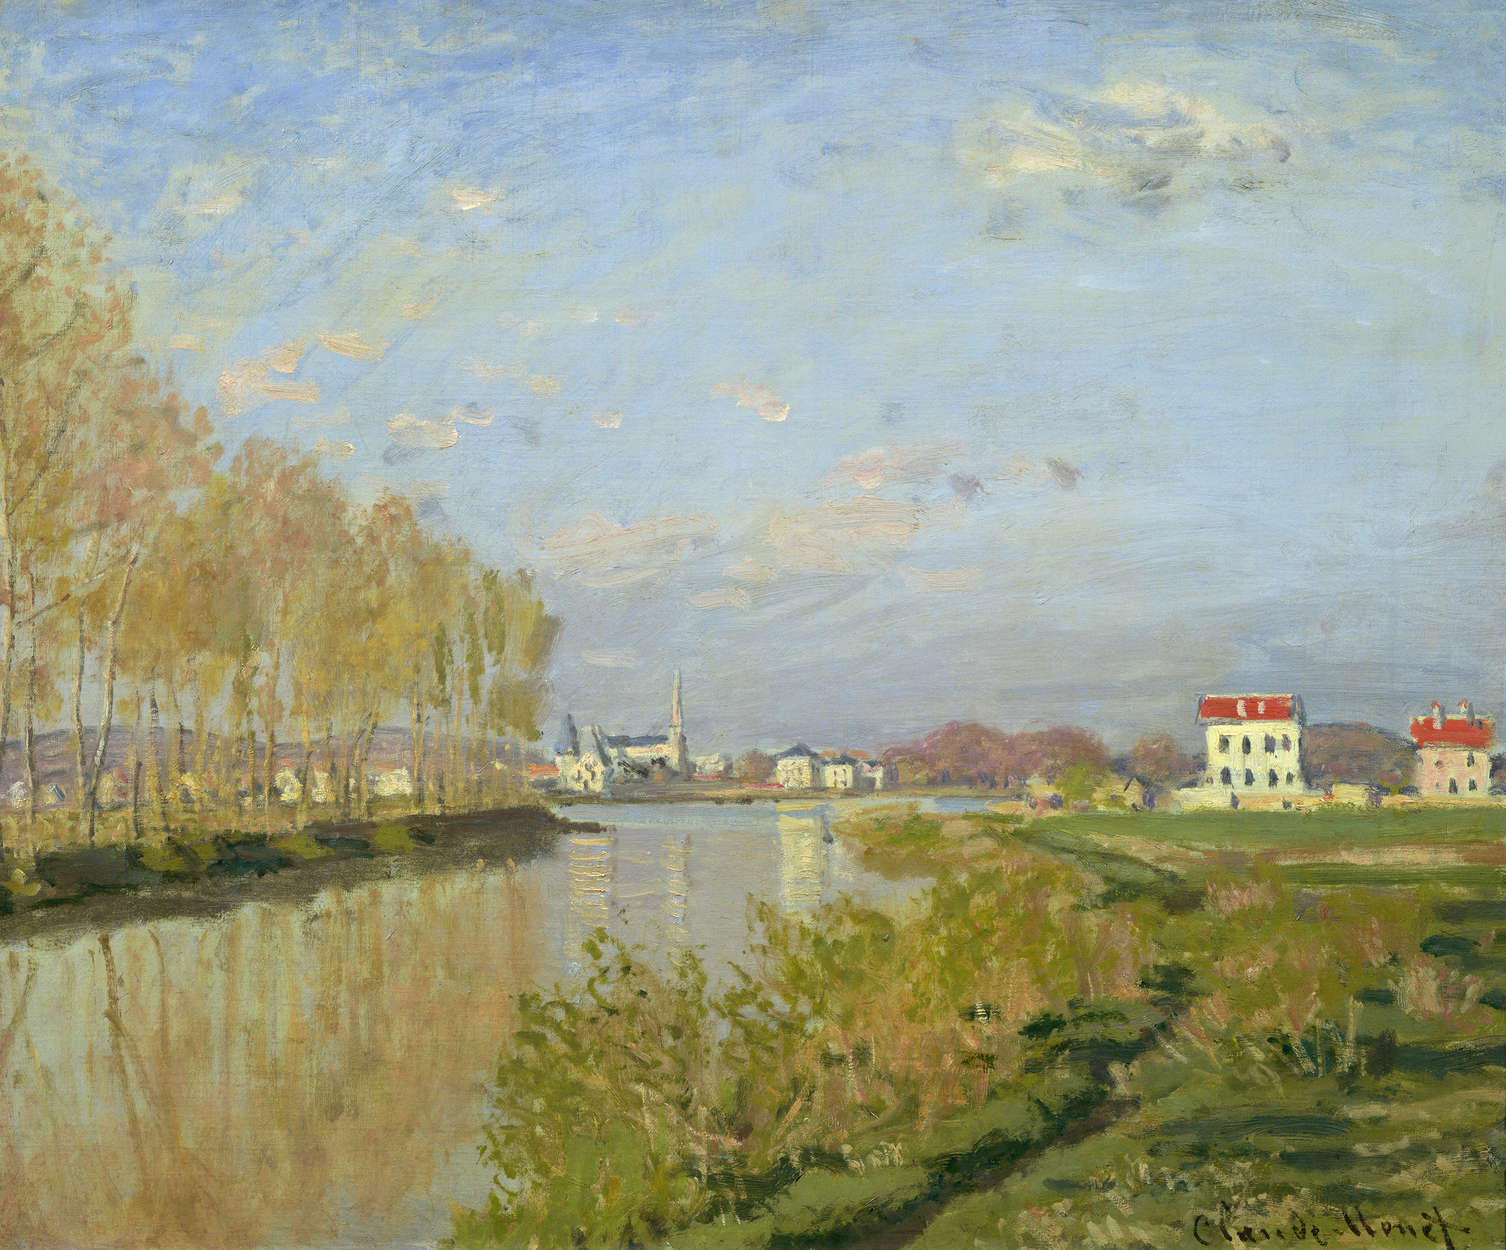             Mural "El Sena en Argenteuil" de Claude Monet
        